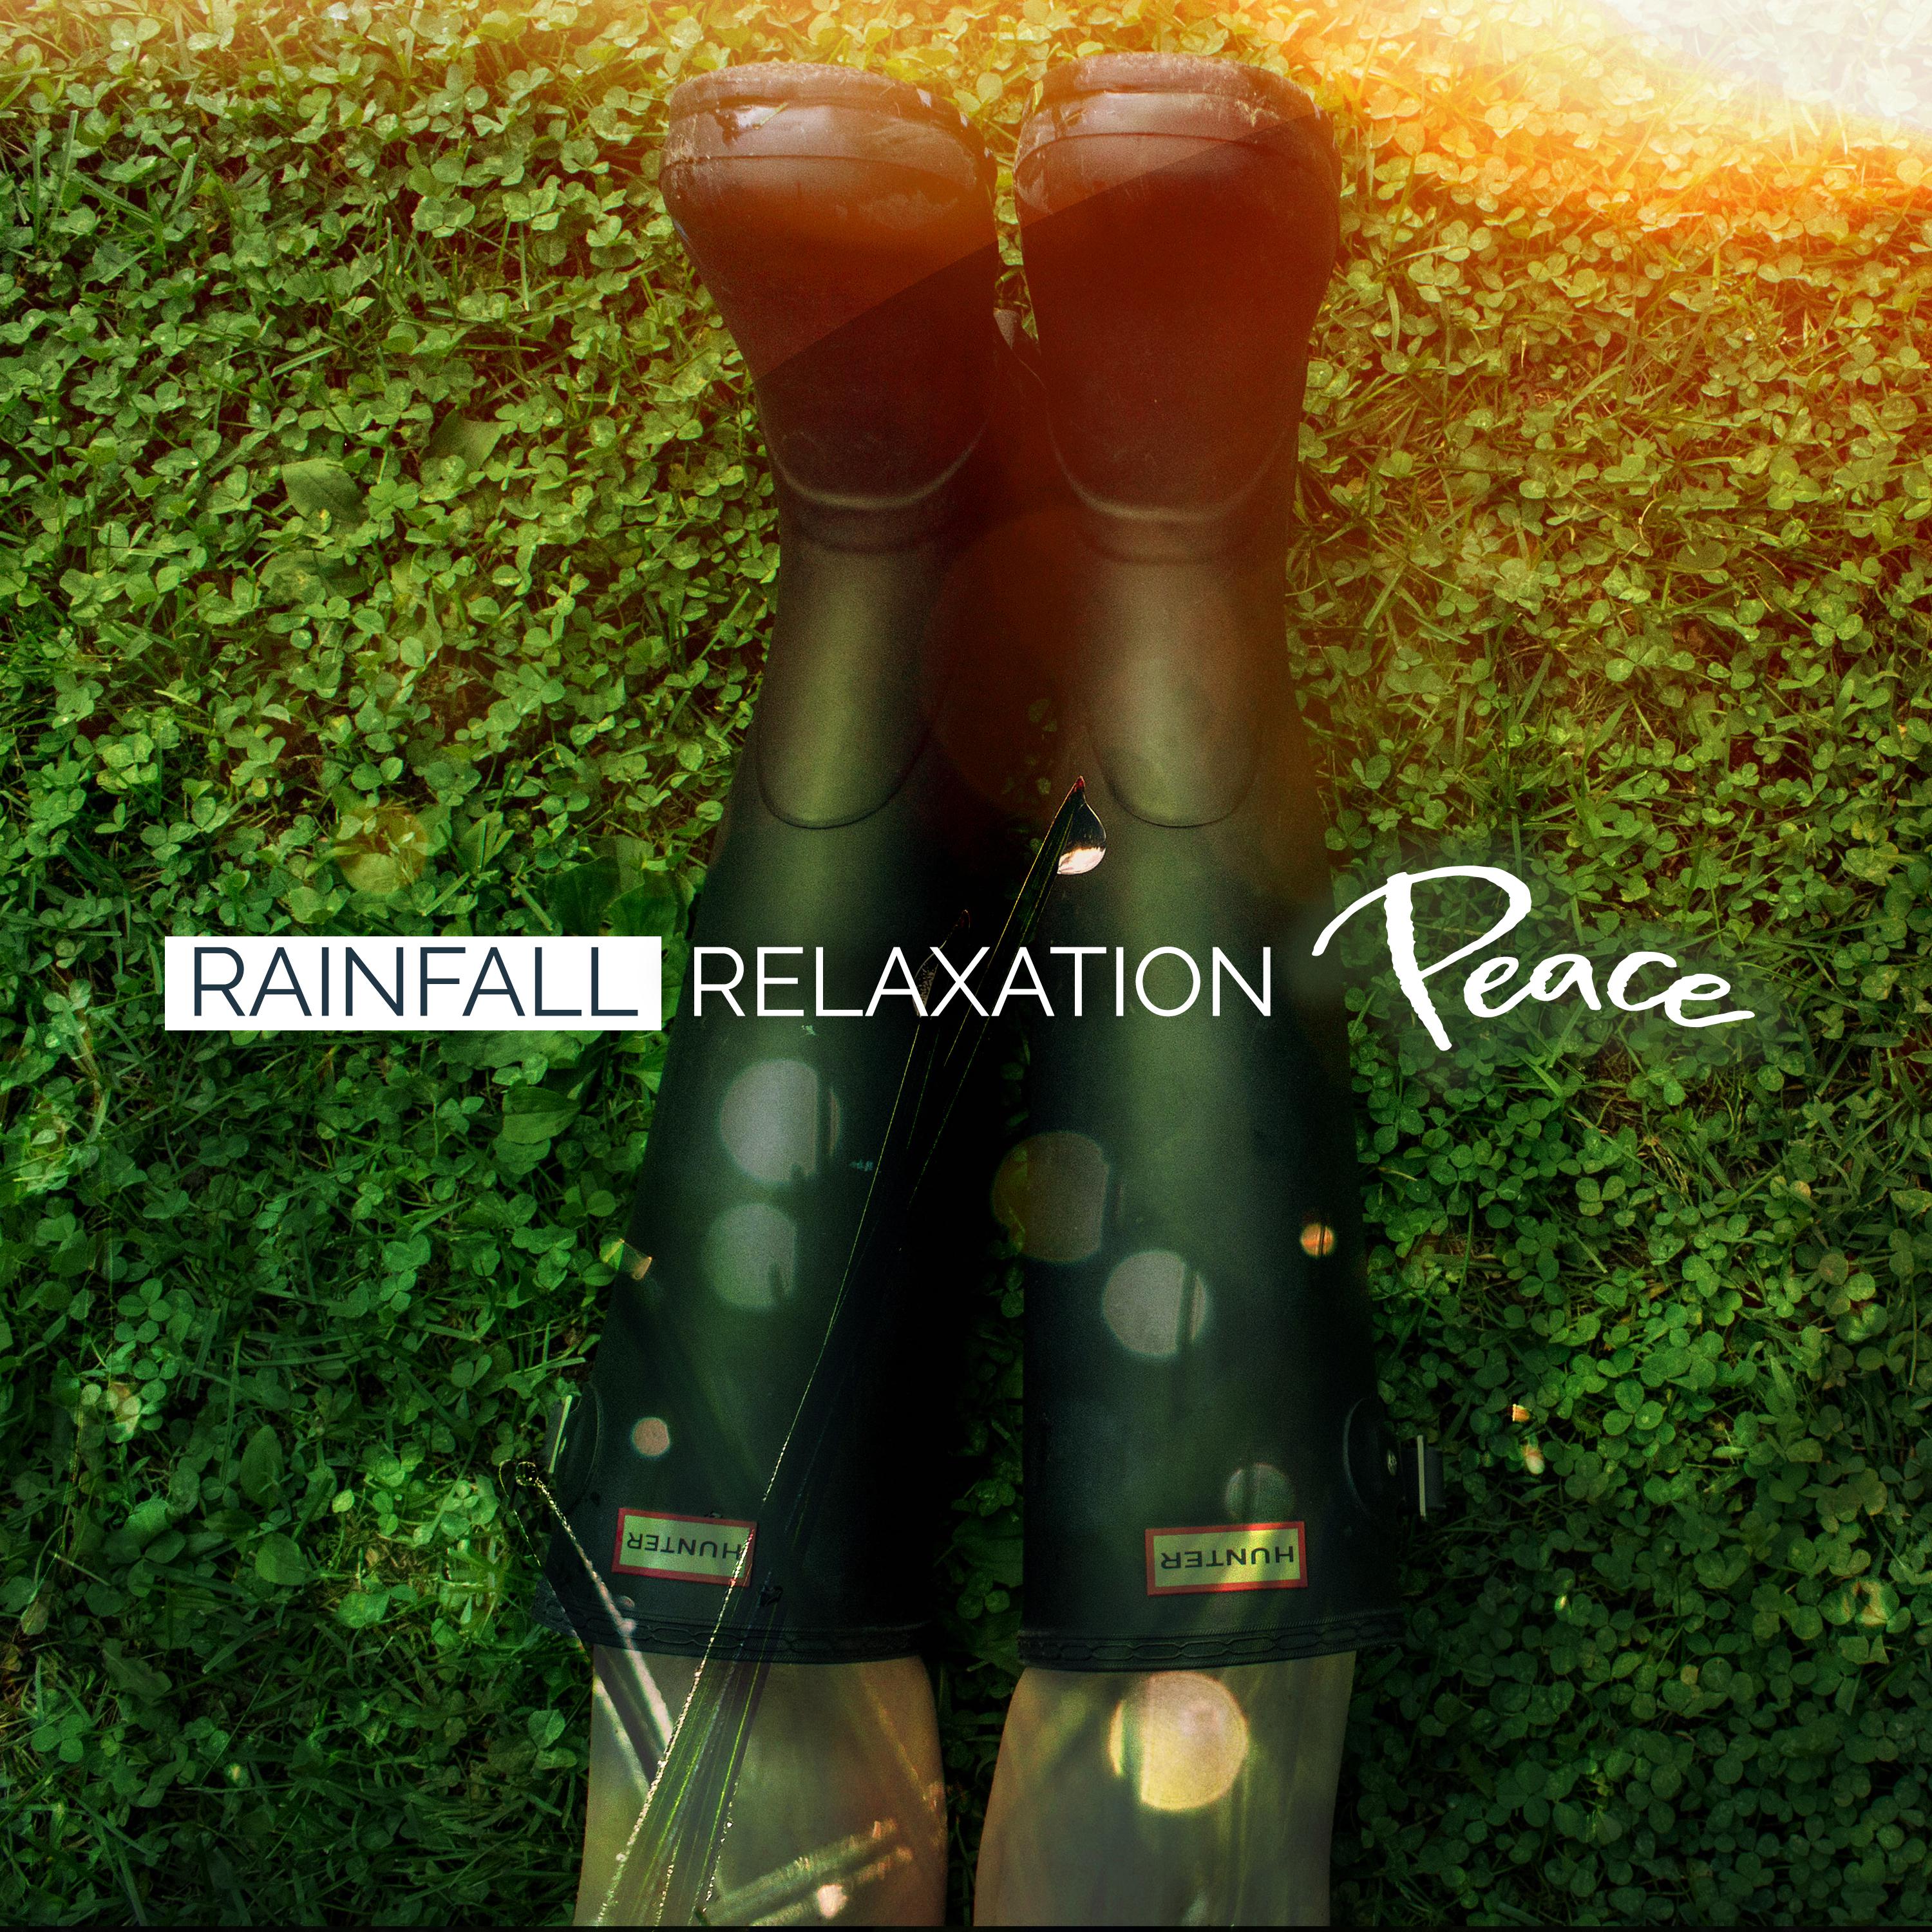 Rainfall Relaxation Peace